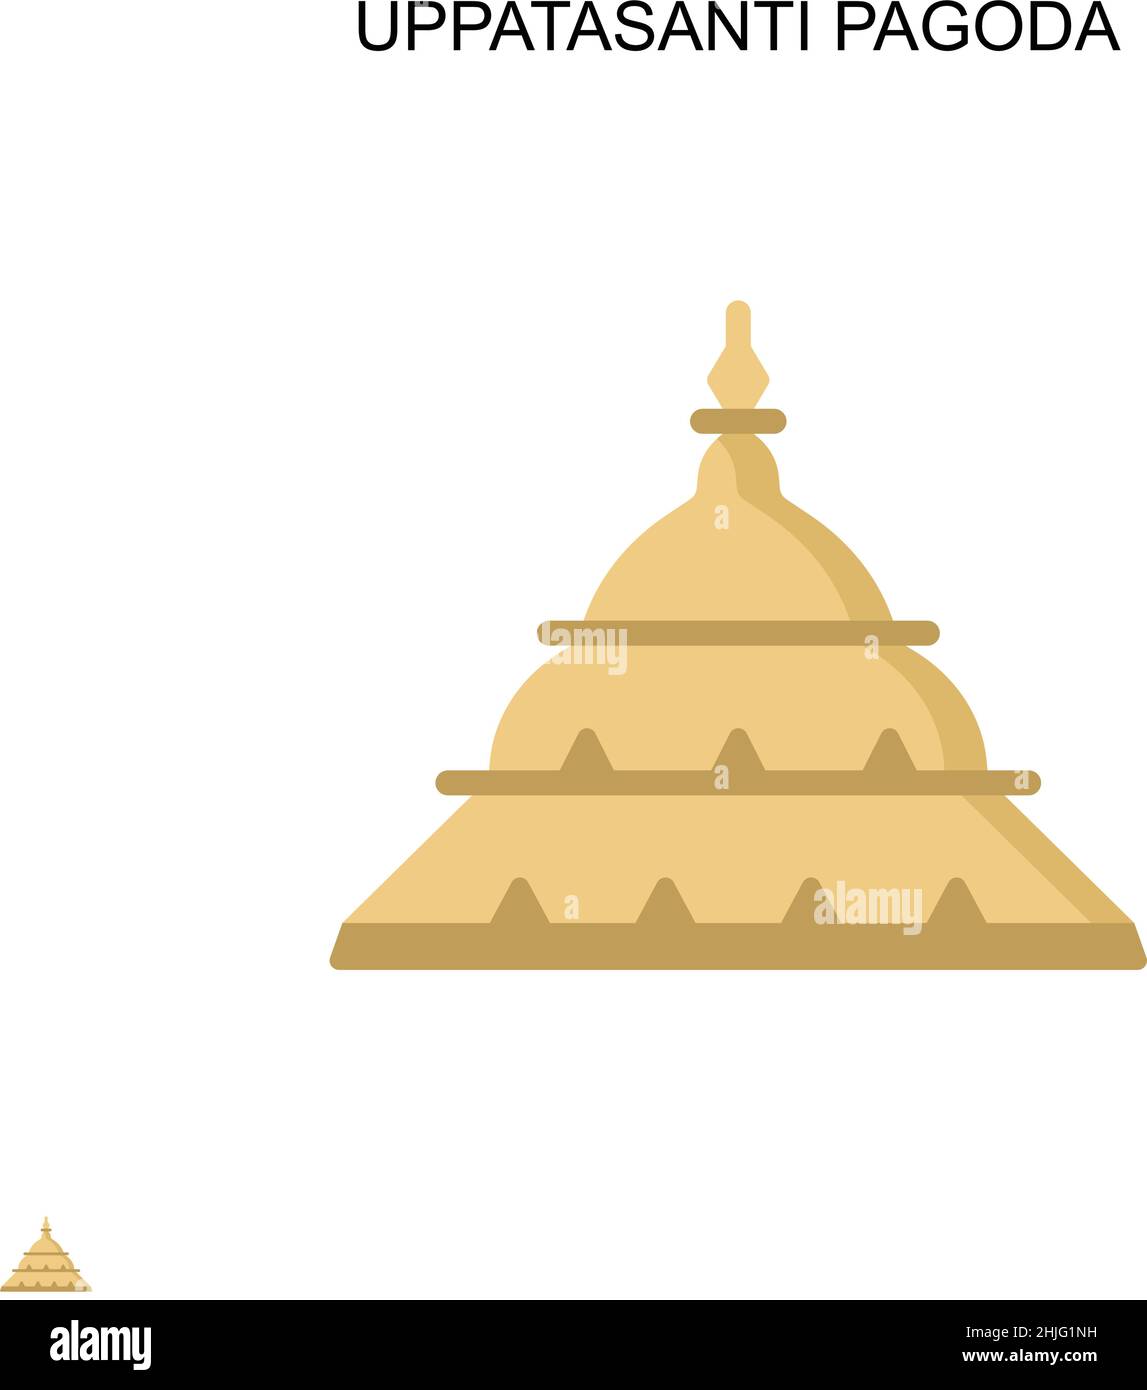 Uppatasanti pagoda Simple vector icon. Illustration symbol design template for web mobile UI element. Stock Vector